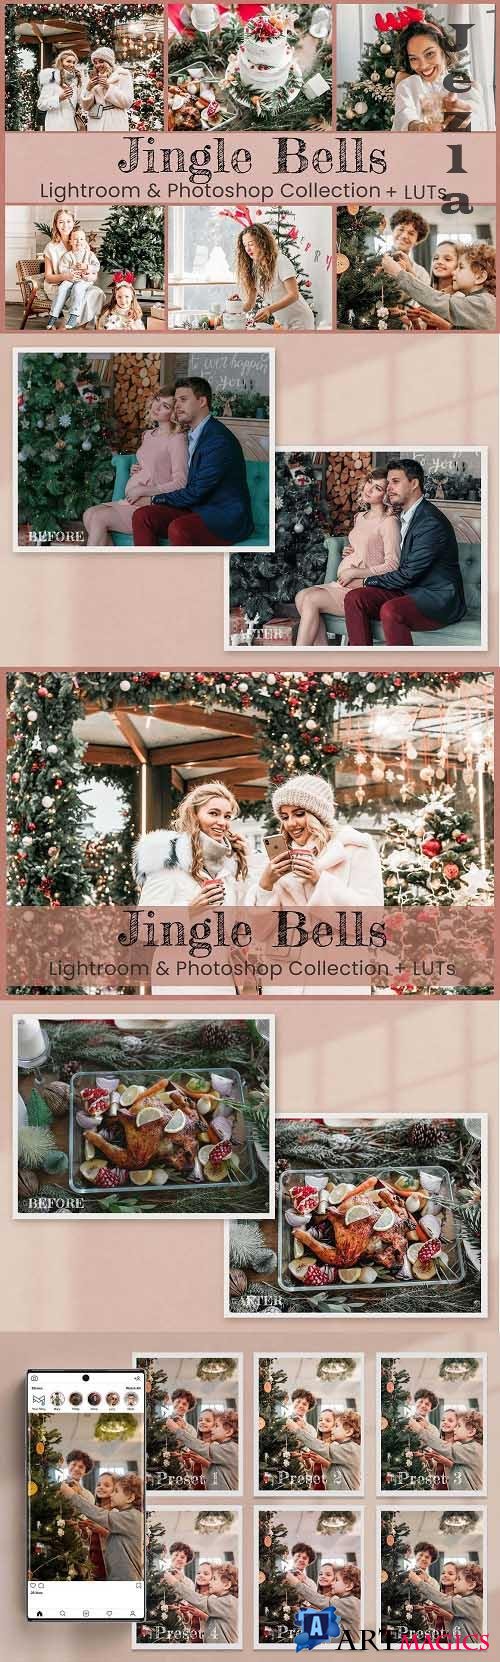 Jingle Bells Lightroom Photoshop LUT - 6562871